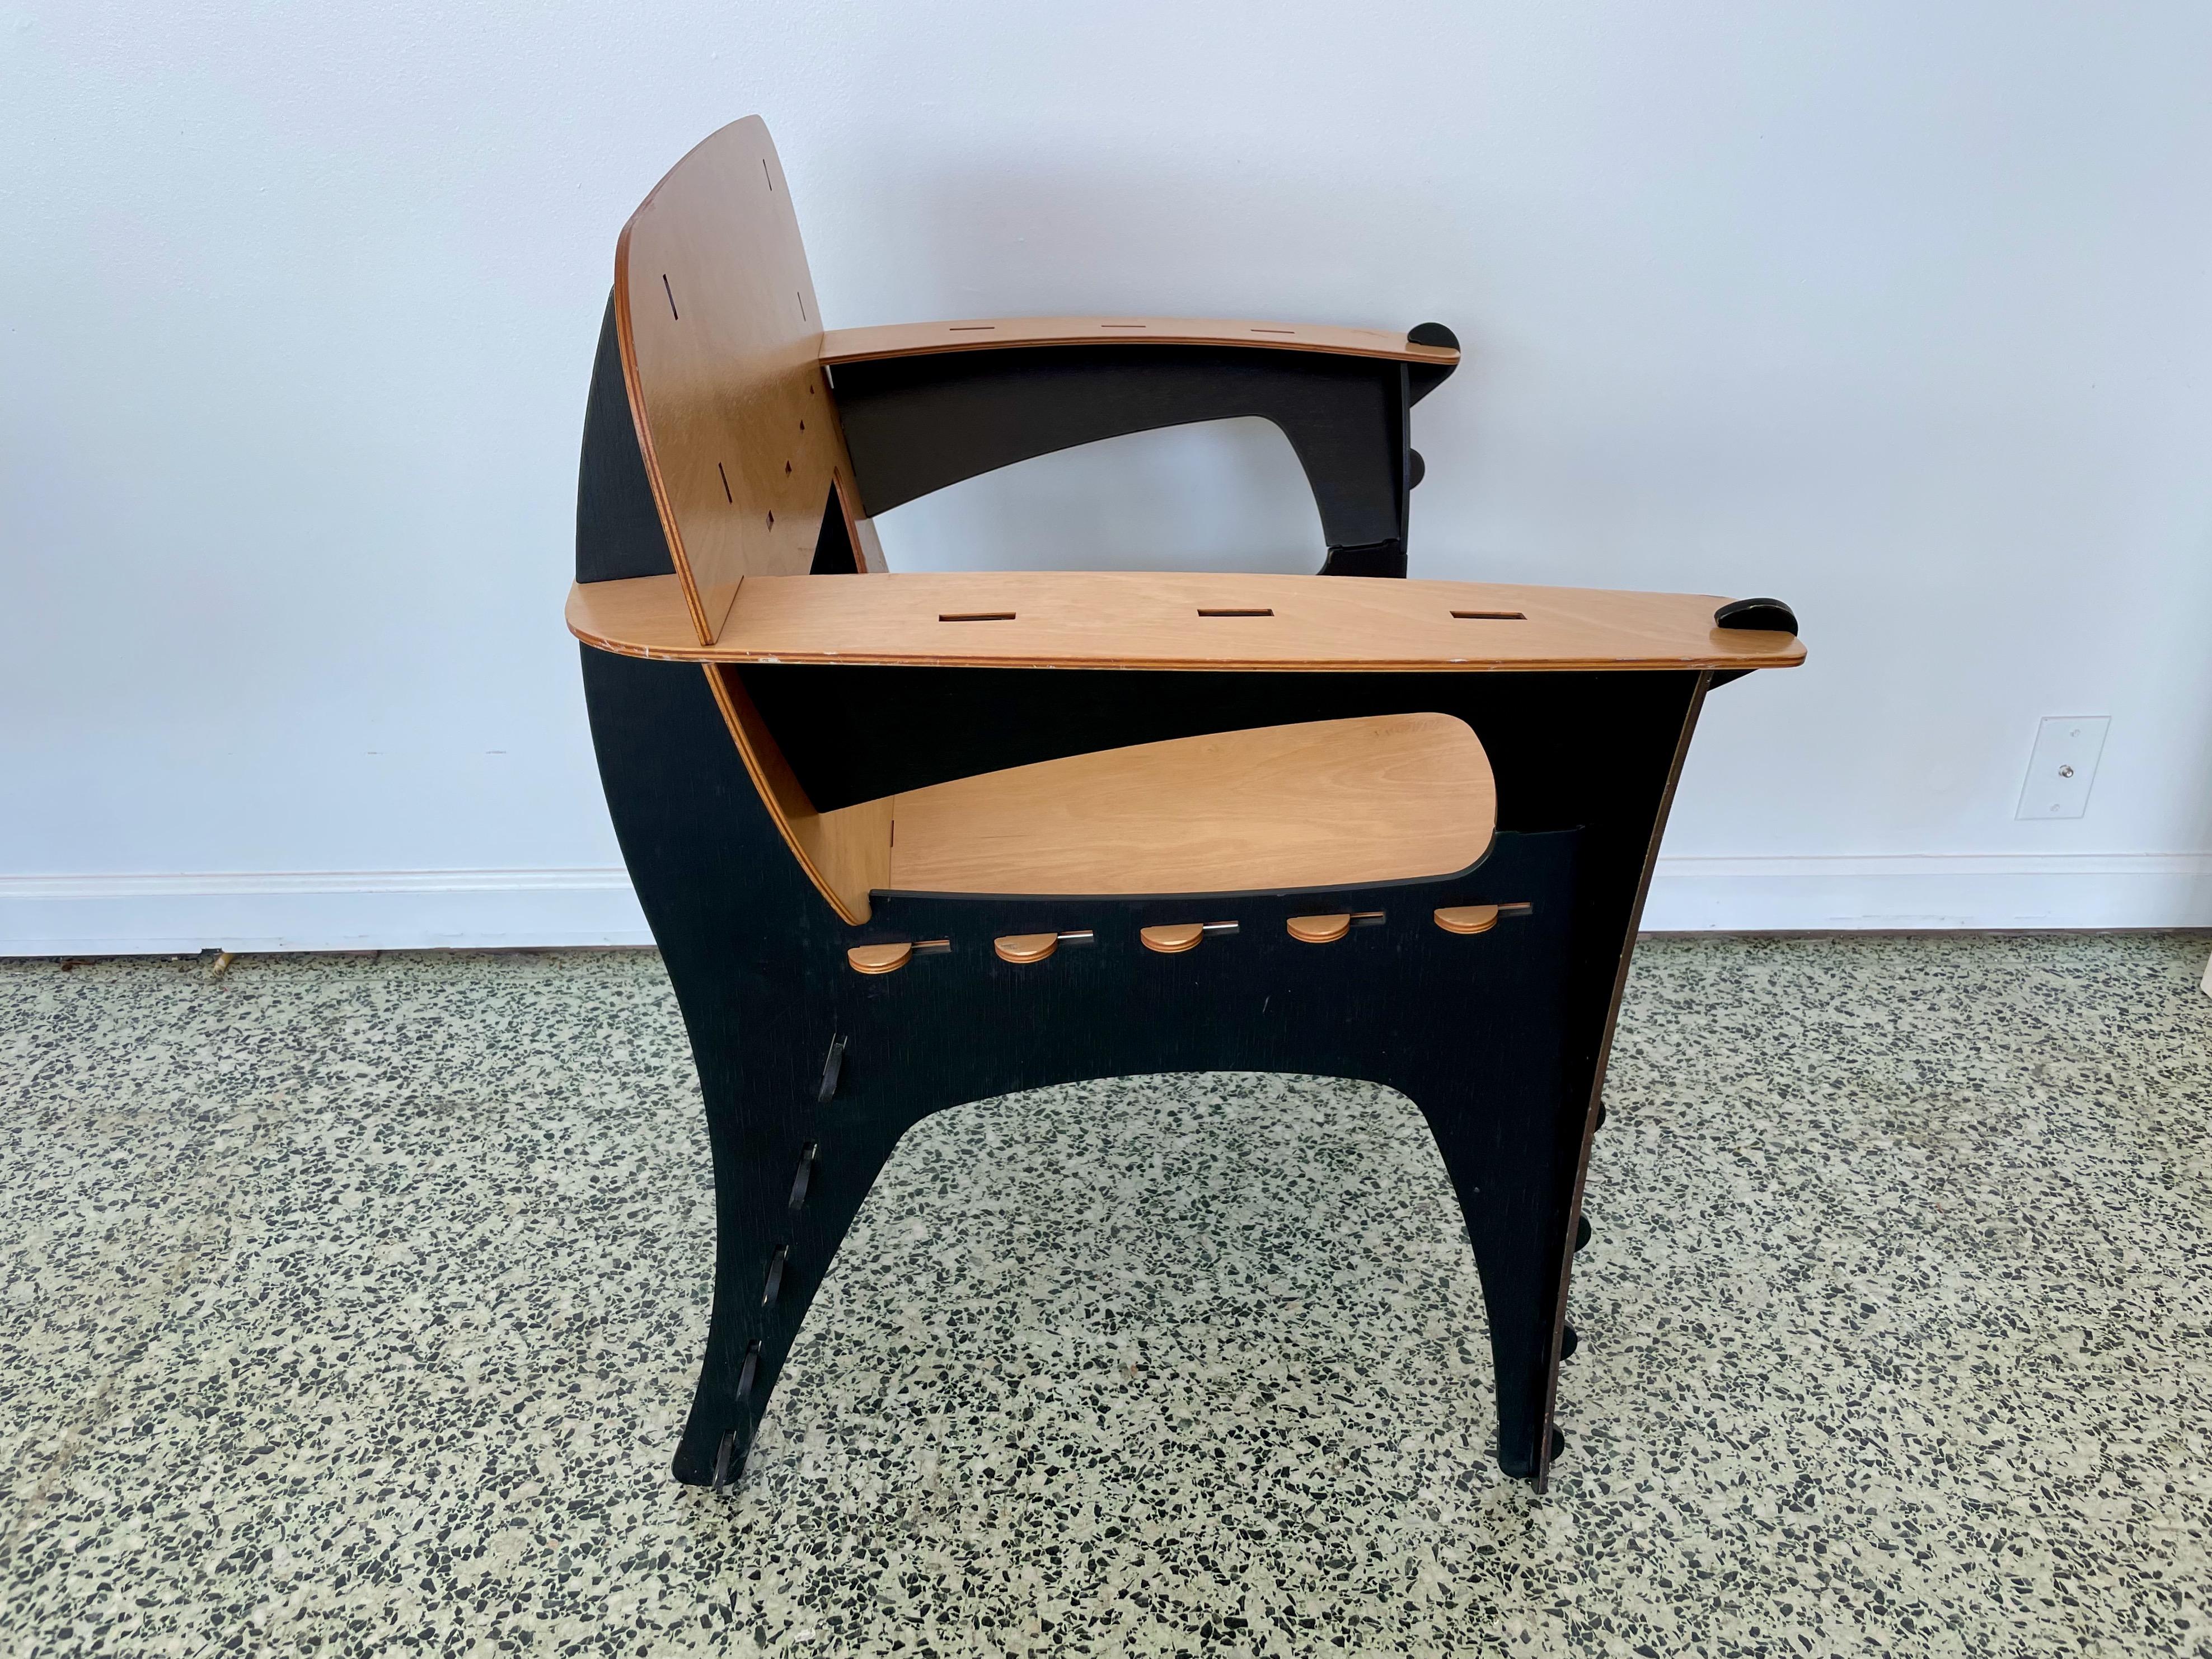 Plywood Puzzle Chair by David Kawecki